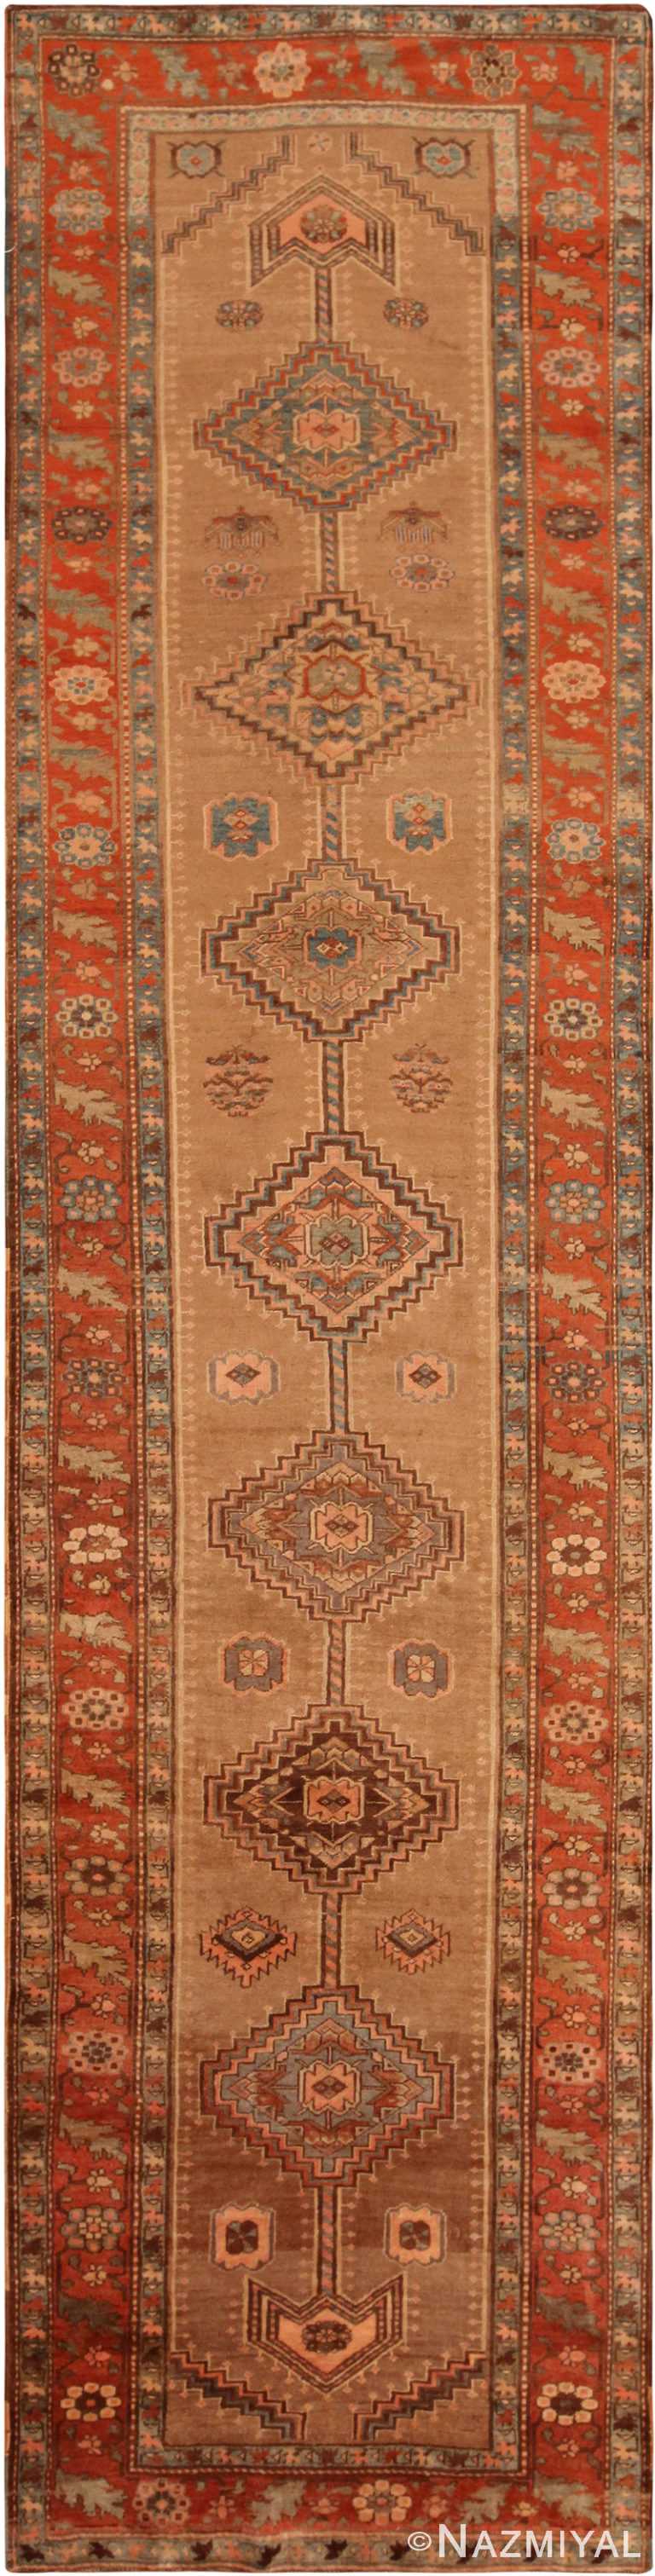 Antique Persian Serab Runner Rug 71835 by Nazmiyal Antique Rugs